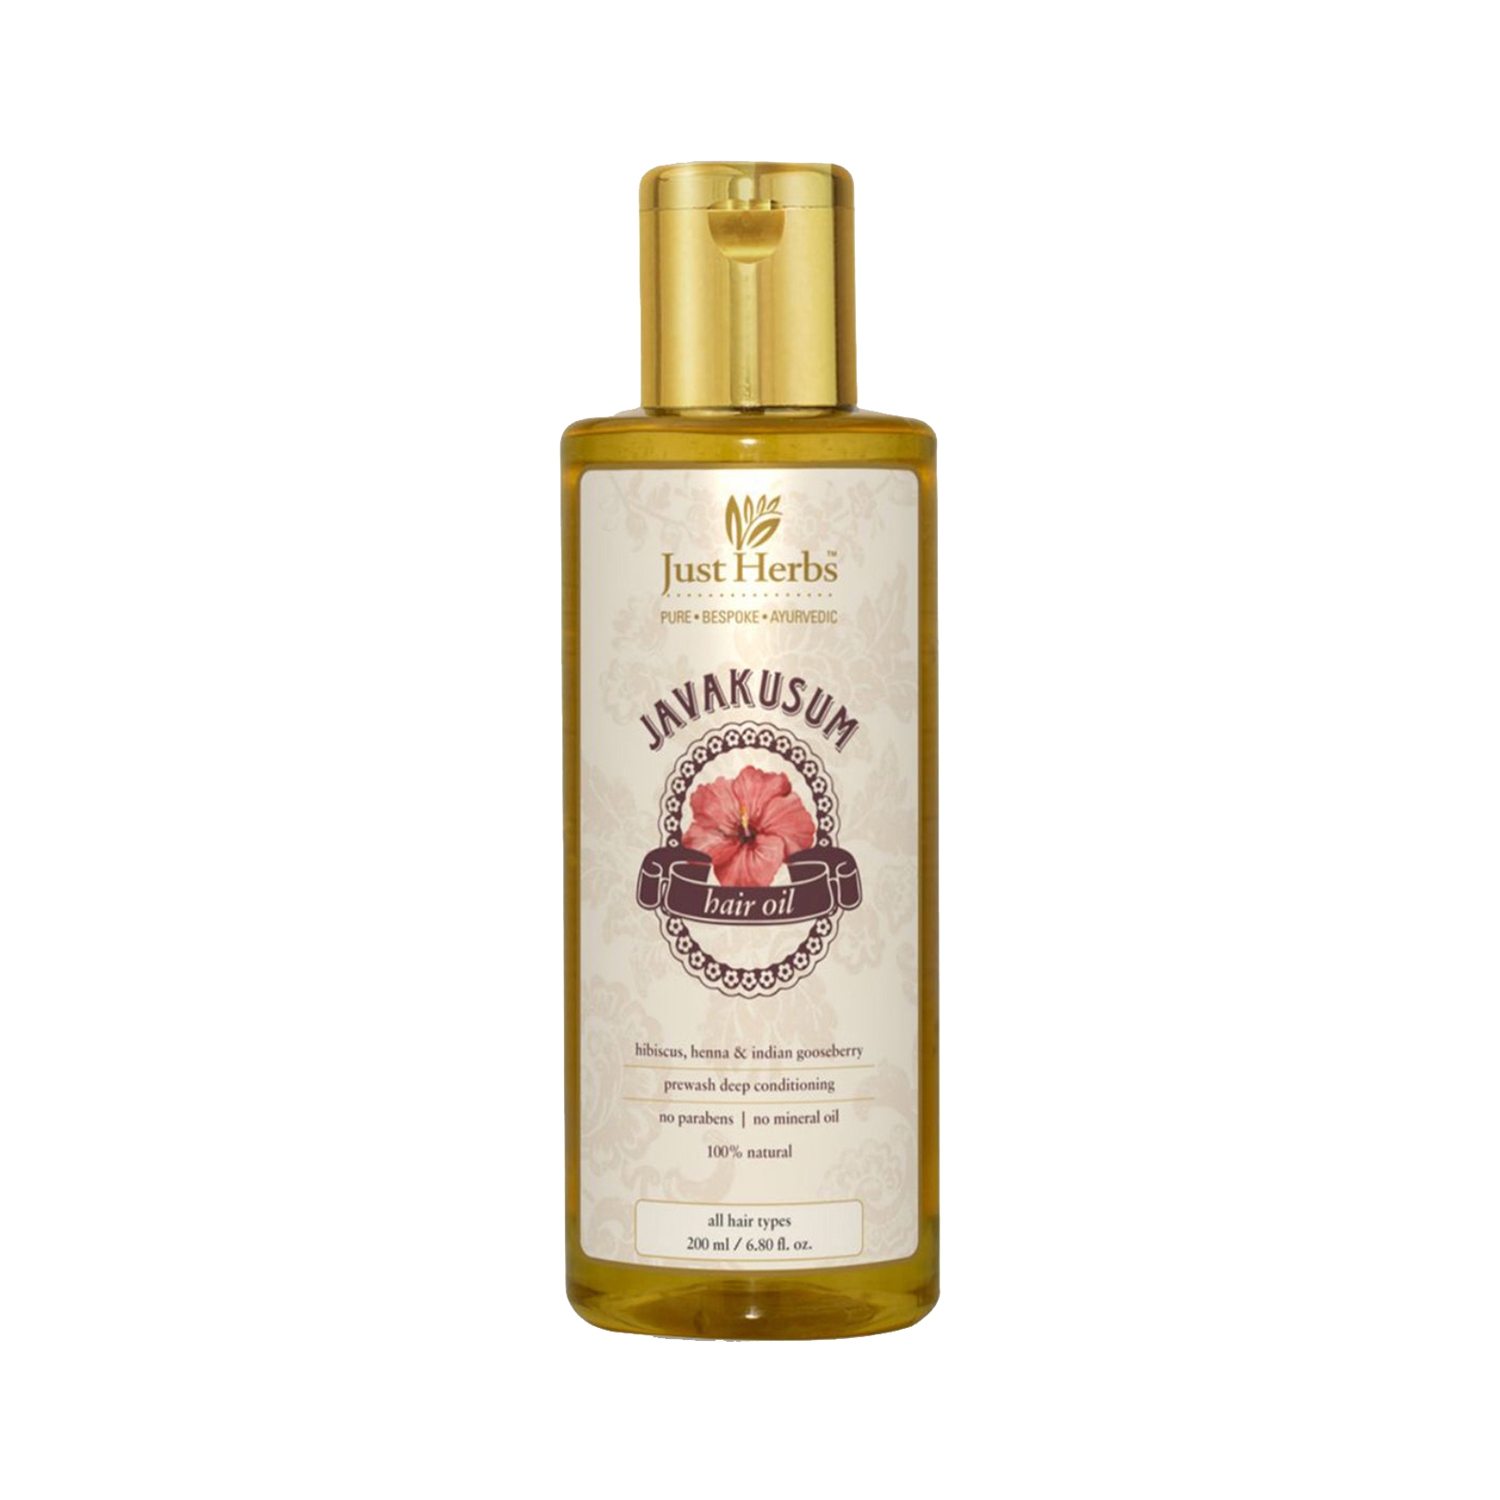 Just Herbs | Just Herbs Javakusum Anti Dandruff & Hairfall Control Hair Oil (200ml)